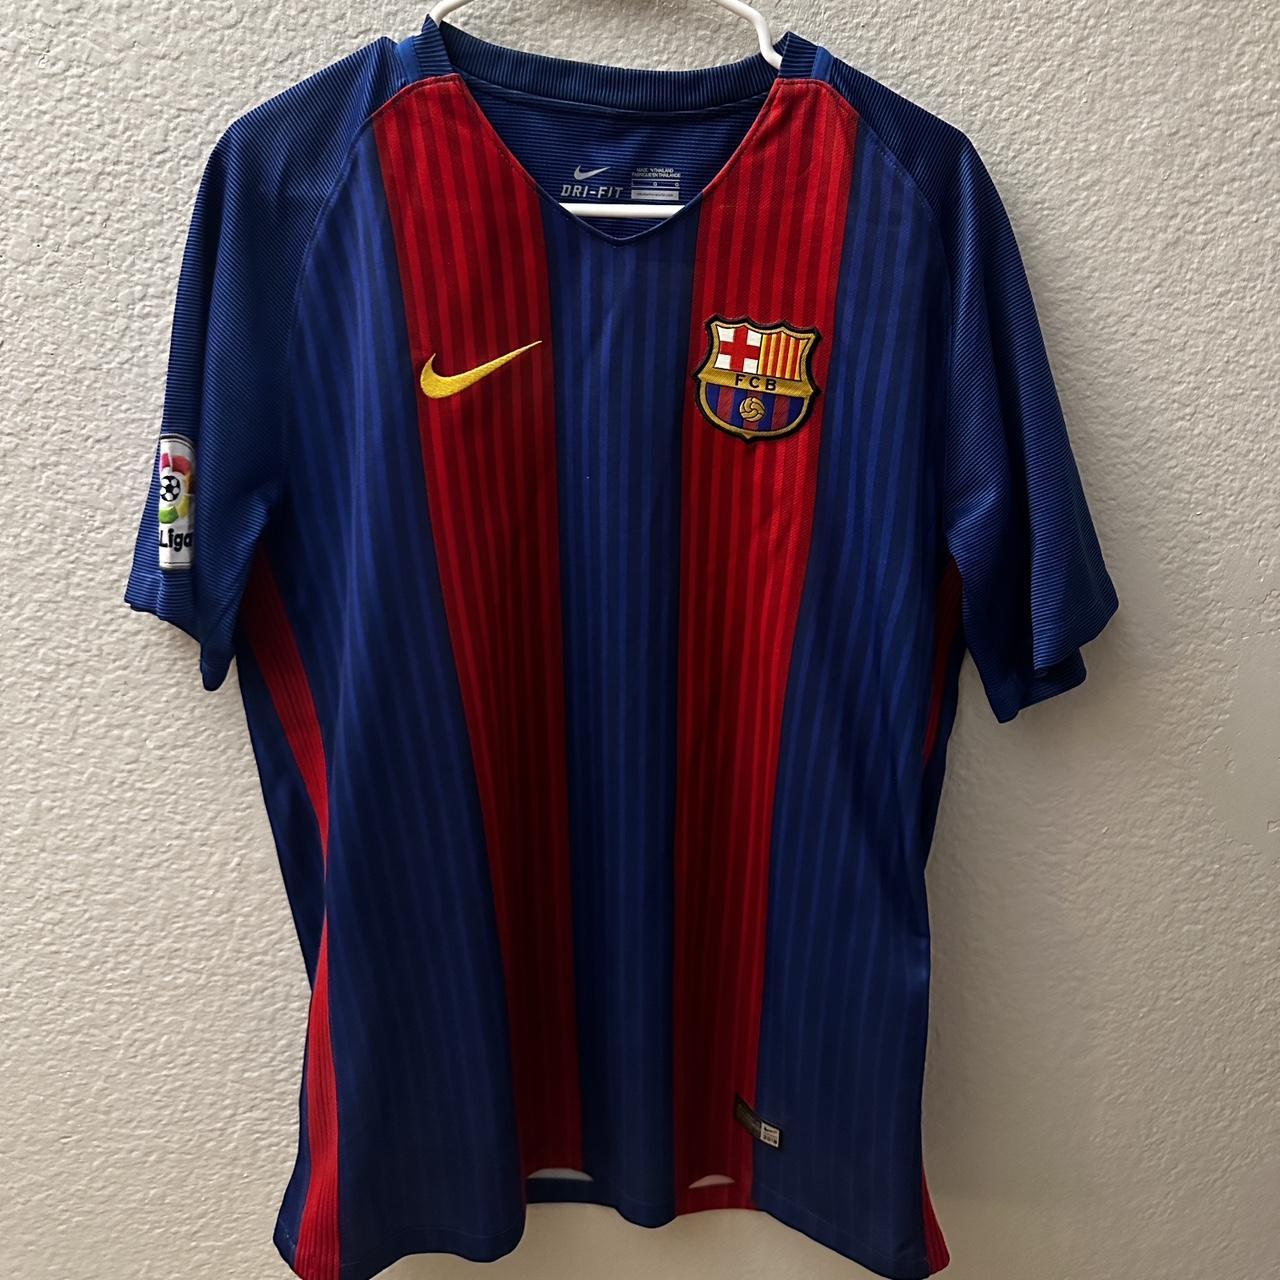 FC Barcelona Iniesta 16-17 jersey size large #barca - Depop